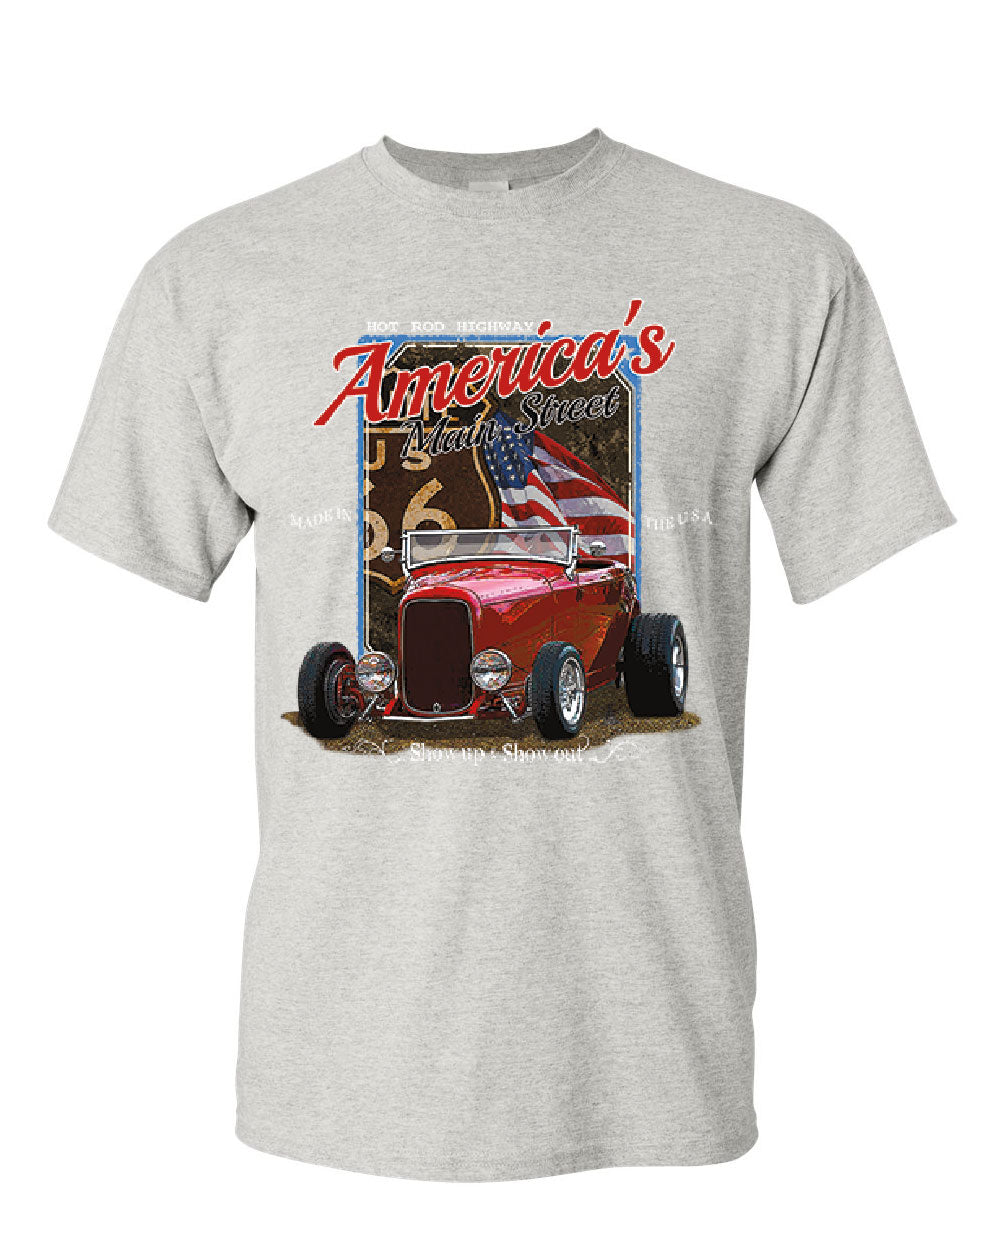 Hot Rod Highway Route 66 T-Shirt America's Main Street Vintage Mens Tee ...